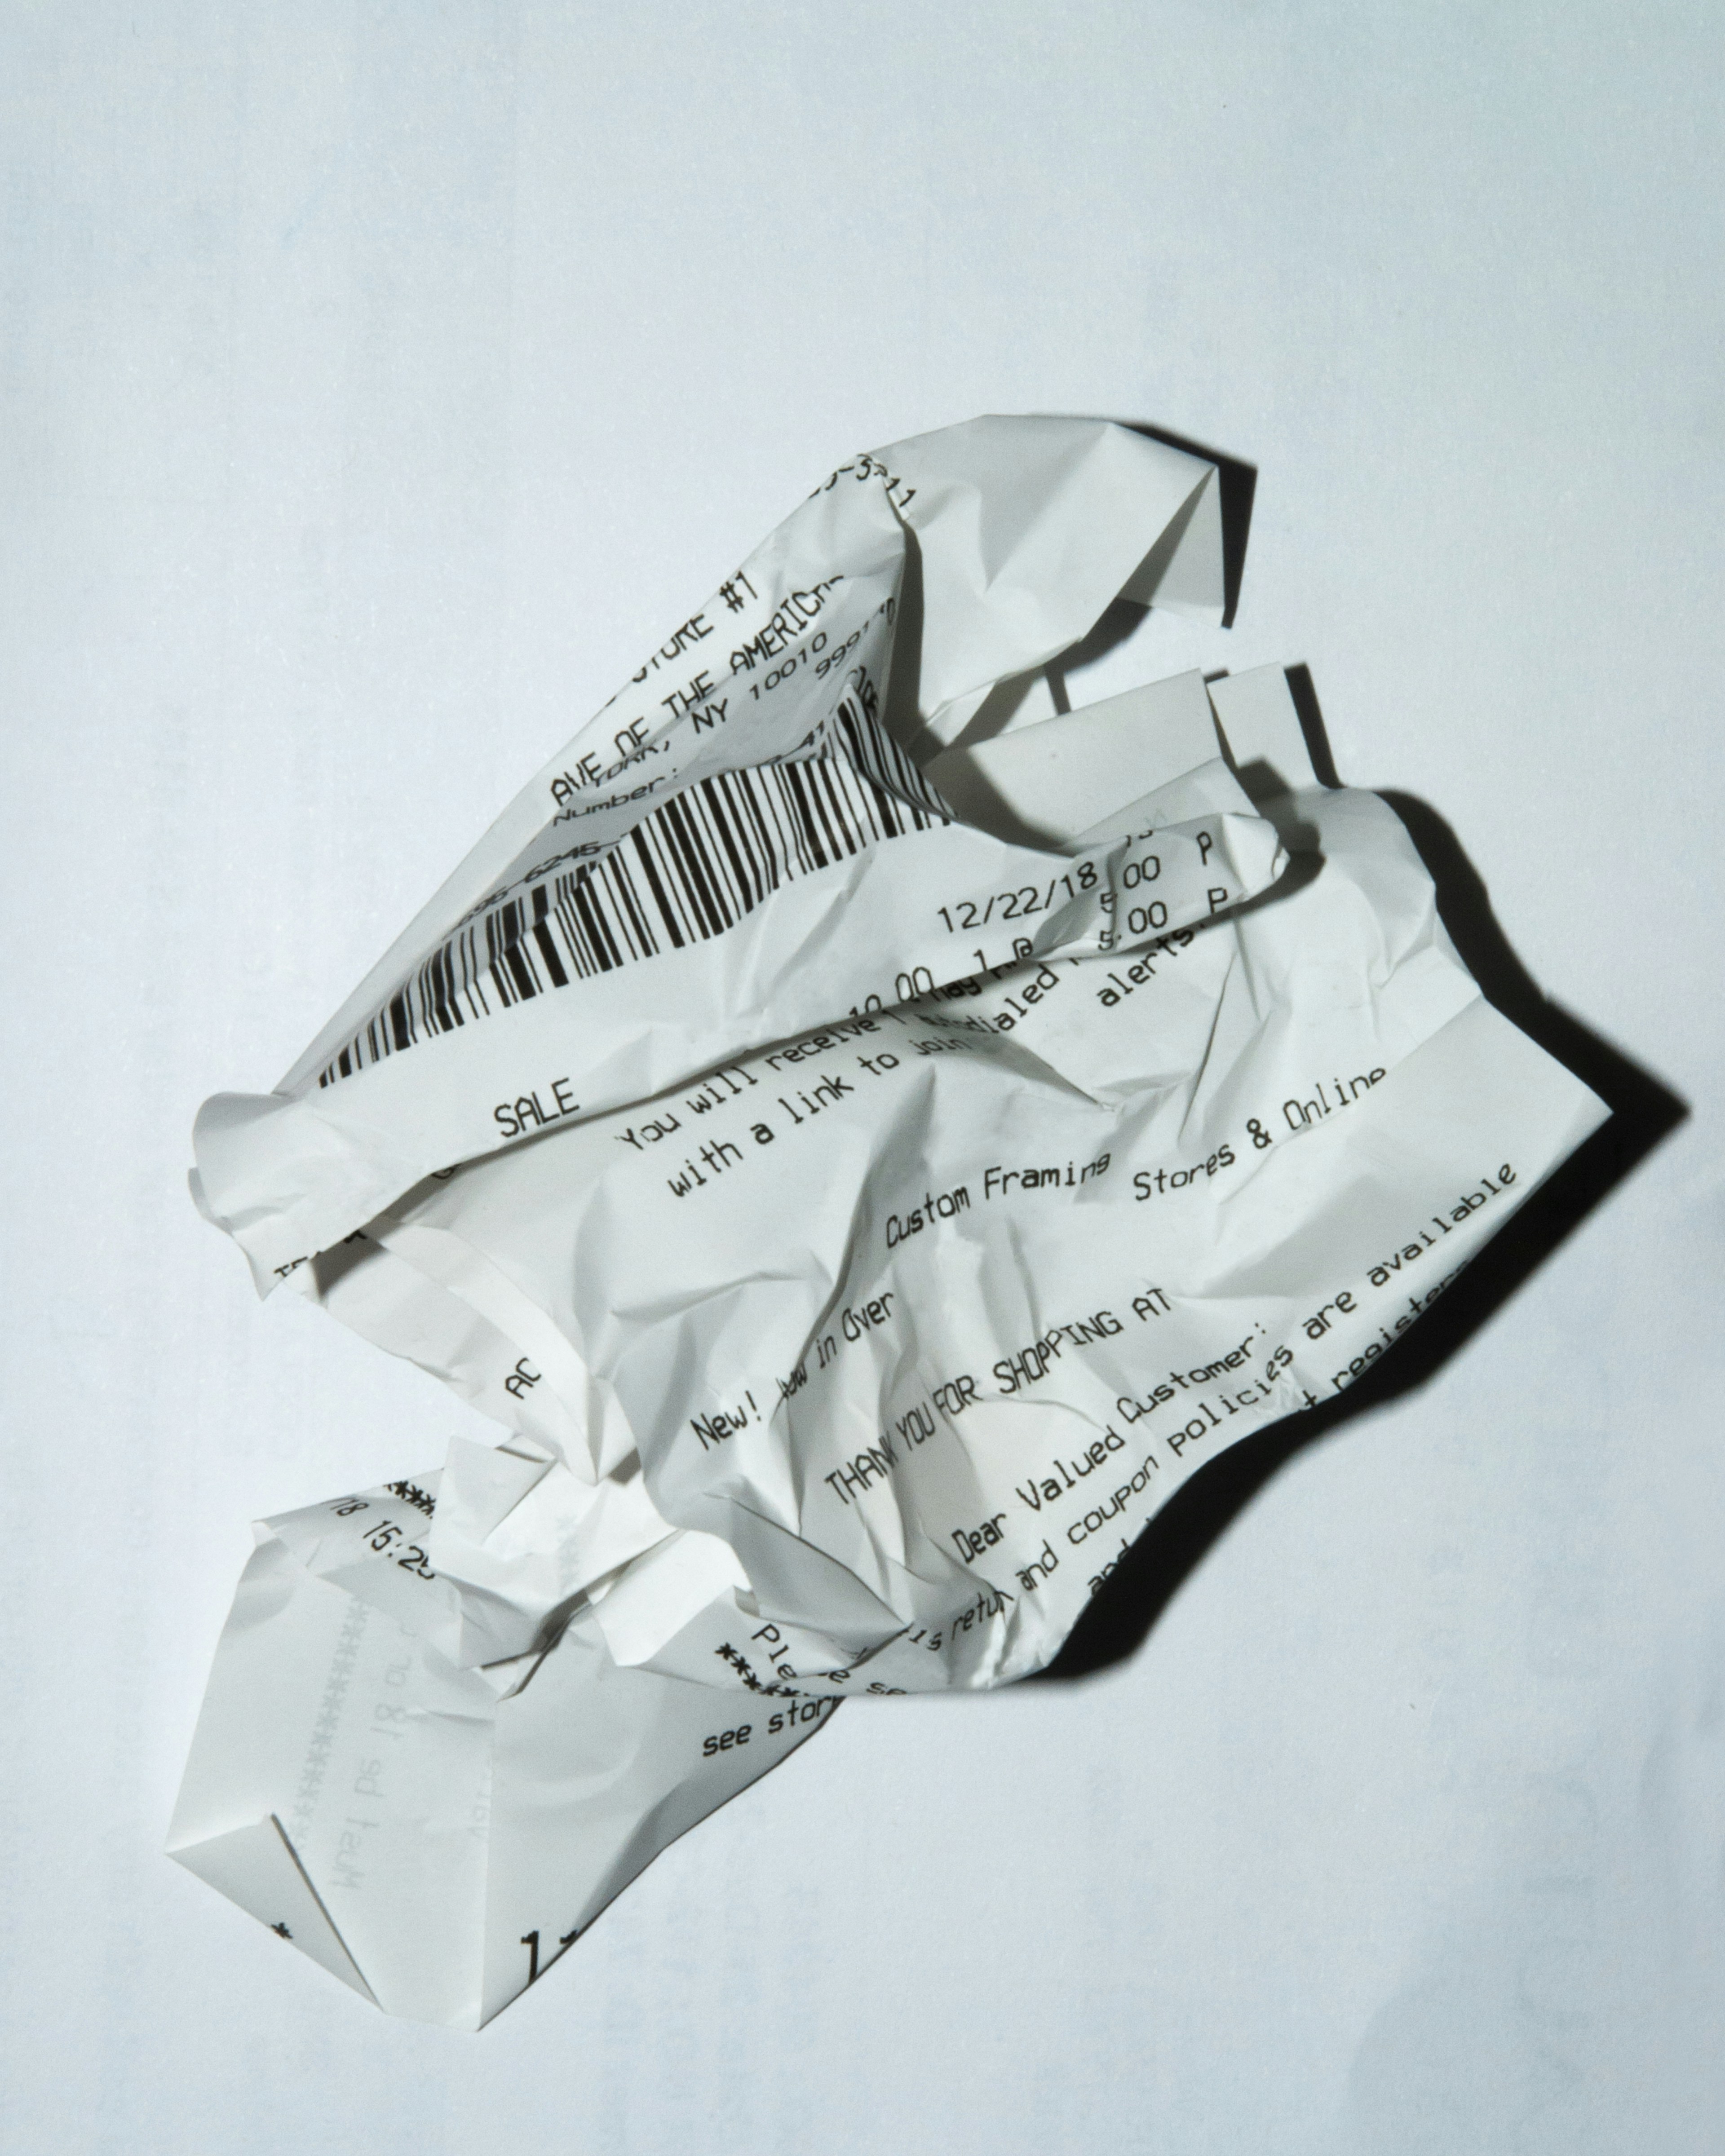 A crumpled receipt | Source: Unsplash